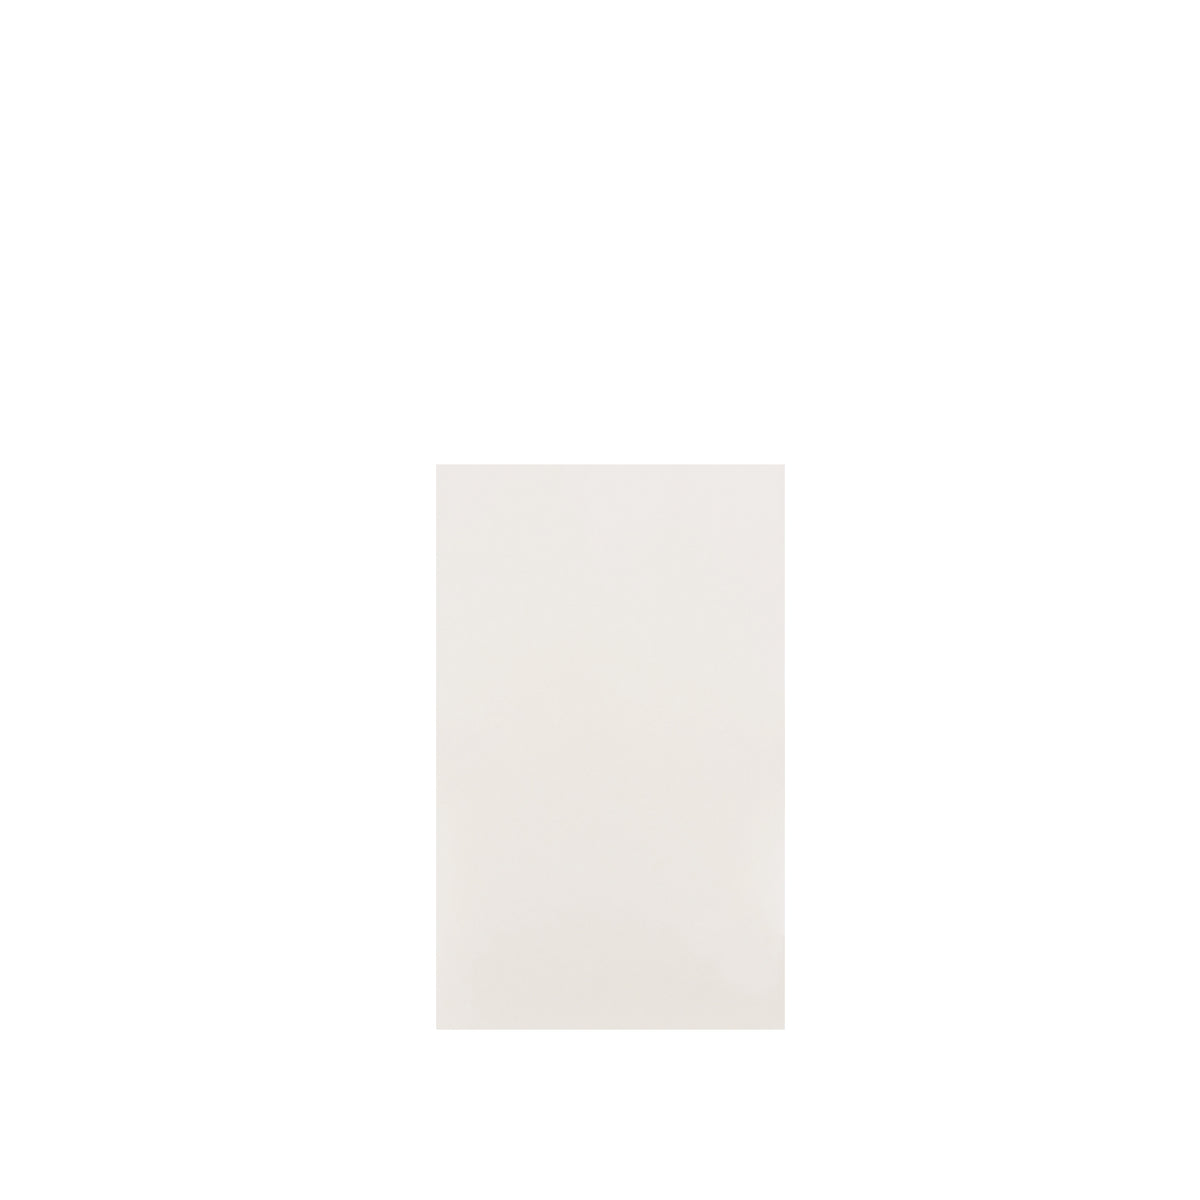 Skin Panel for Inset Vintage White raised Panel Style - RTA Wholesalers